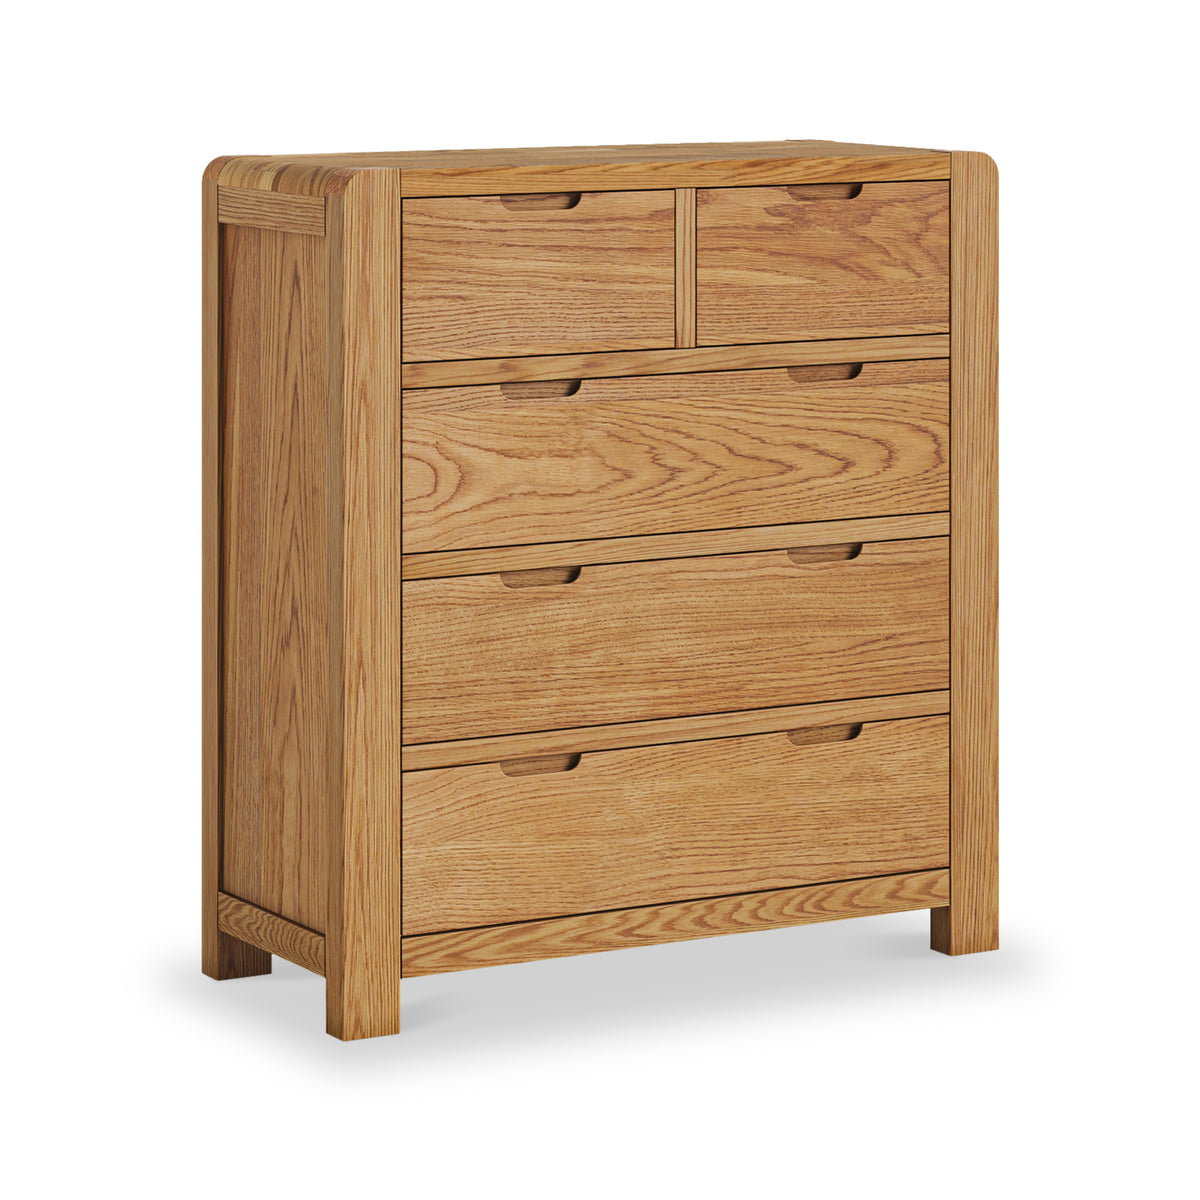 Harvey Oak 2 Over 3 Chest of drawer from Roseland Furniture